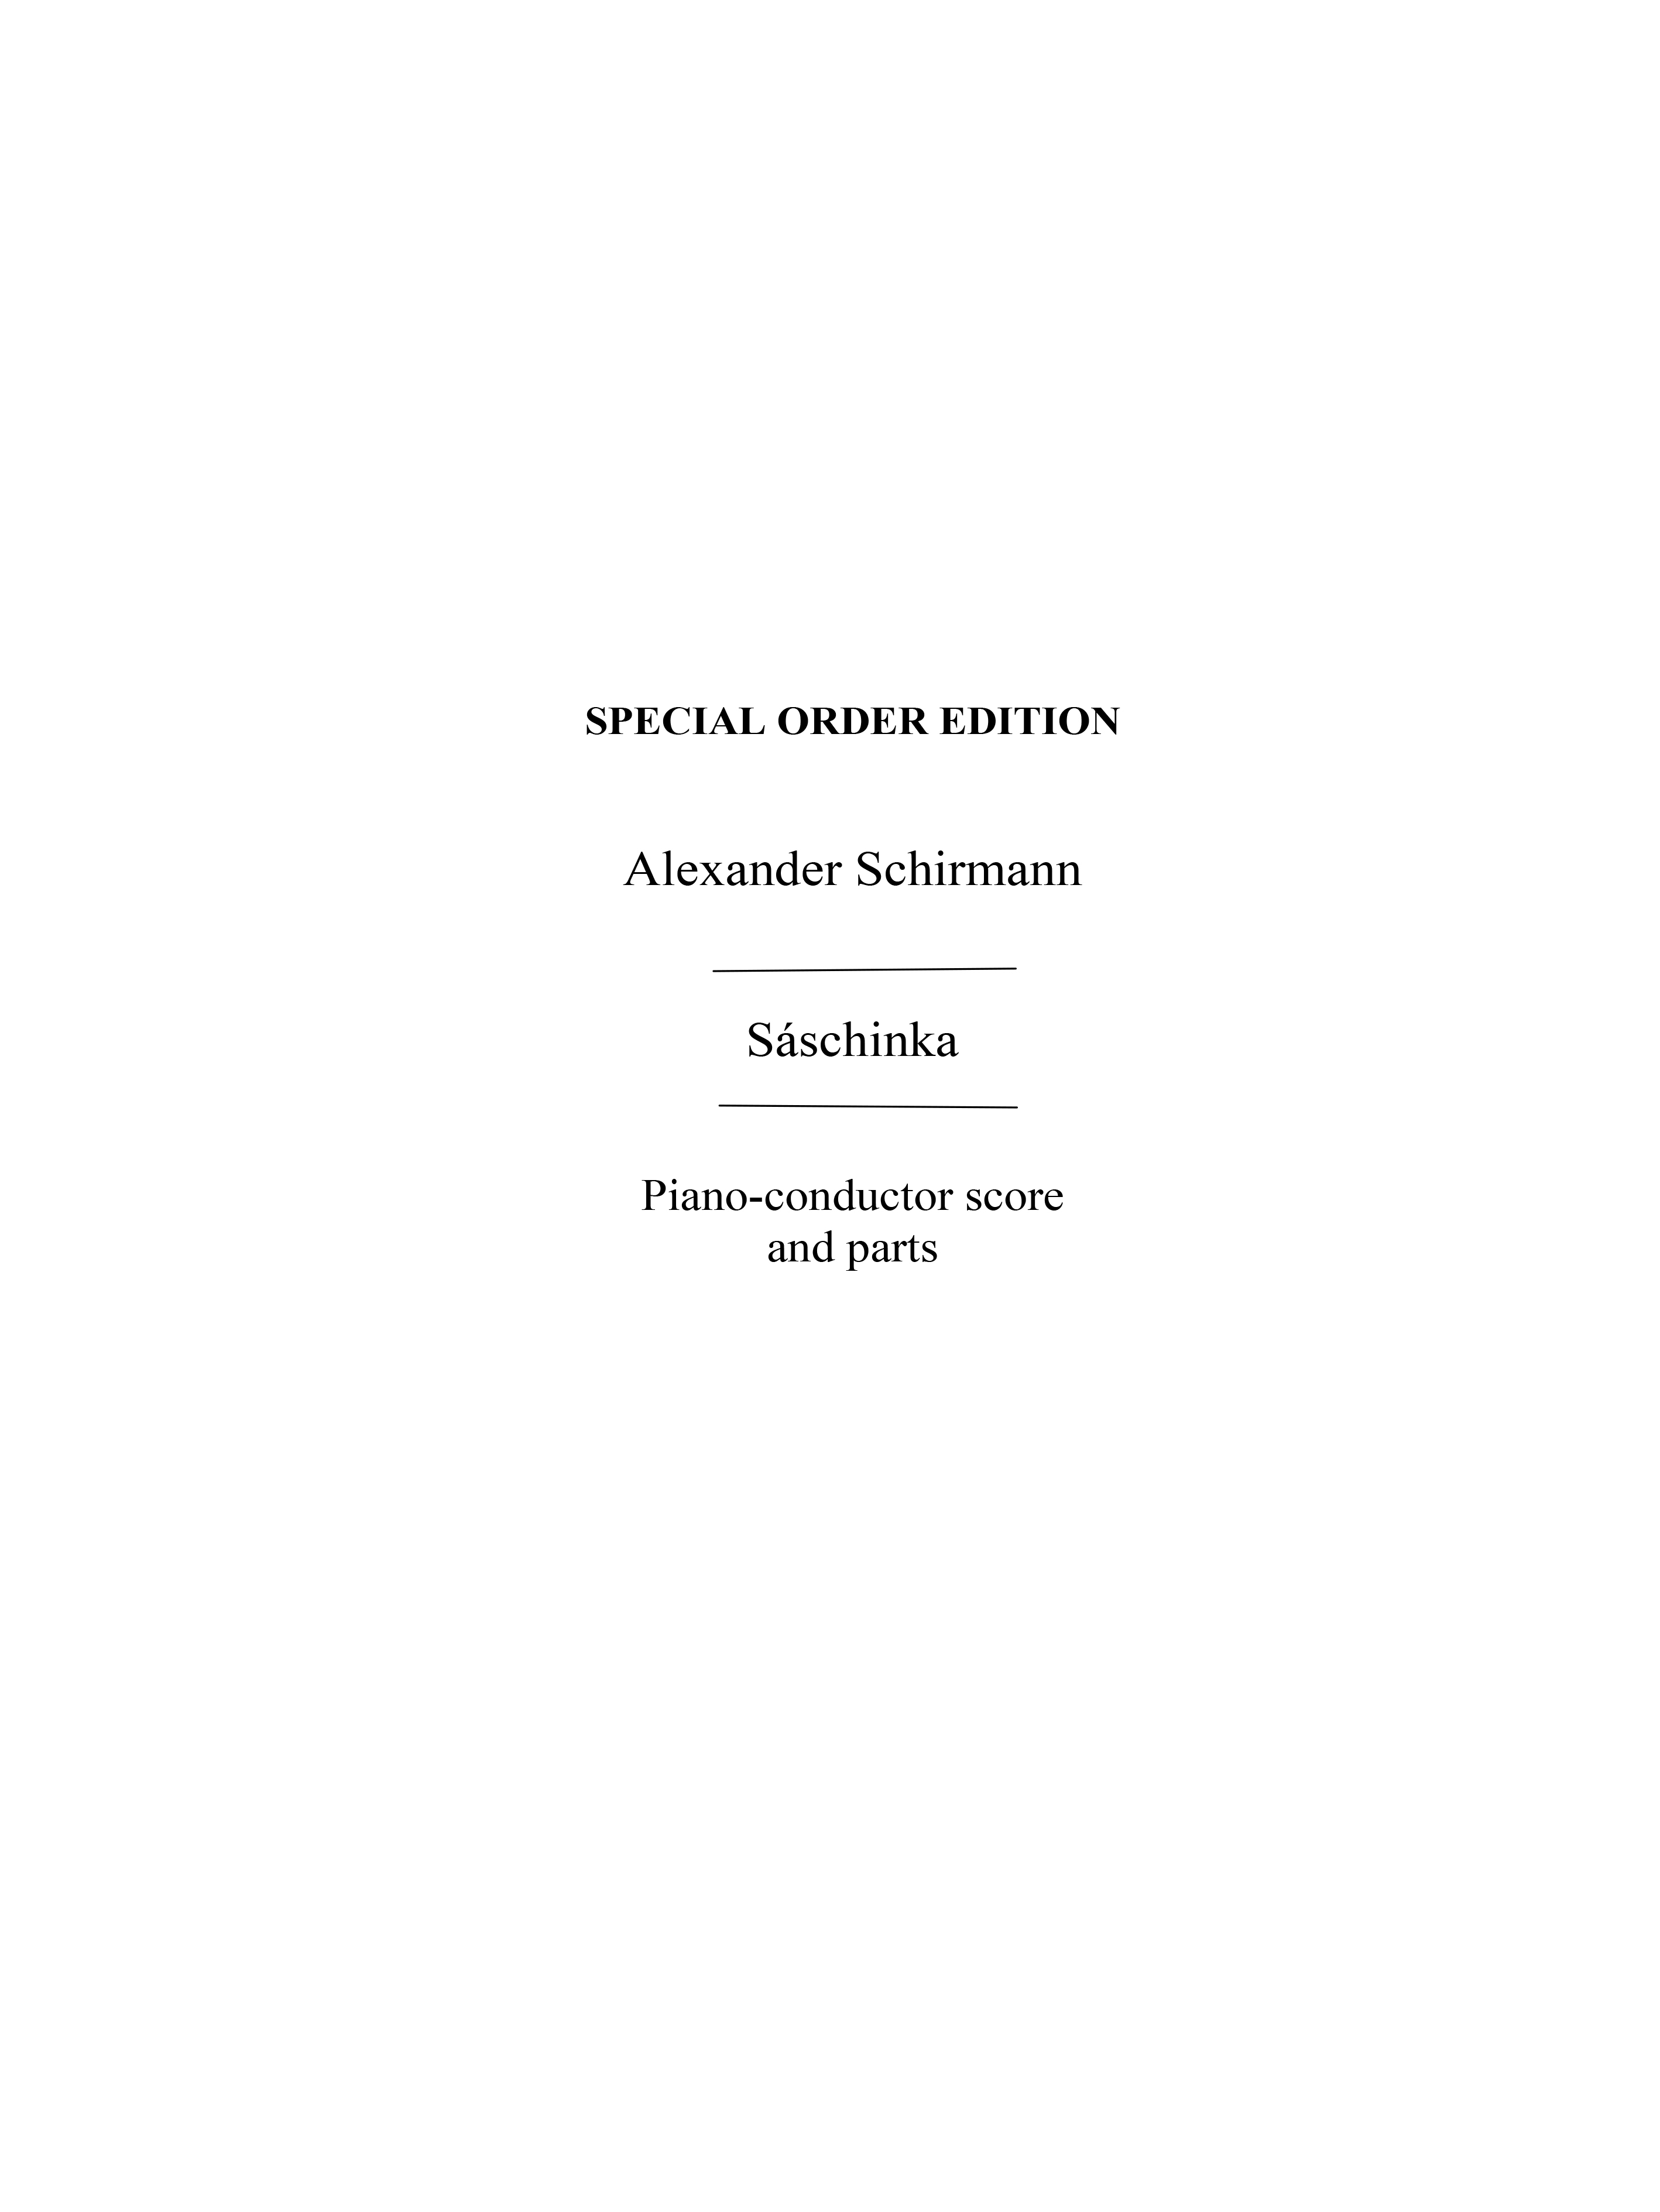 Schirmann, A Saschinka Potpourri On Rssn Gypsy Ars & Dncs Orch Sc/Pts